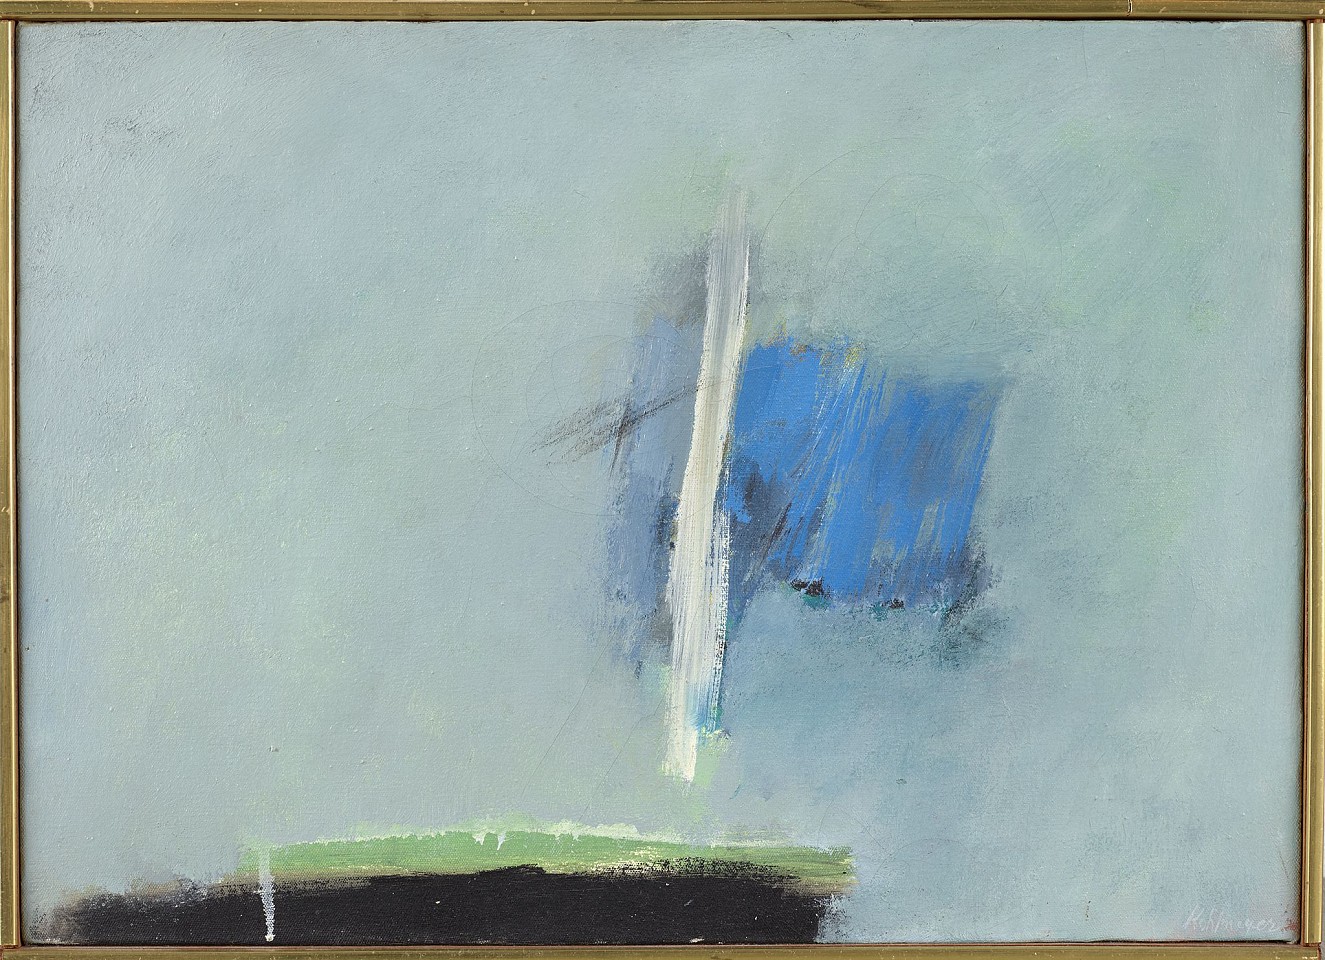 Ida Kohlmeyer, Landscape No. 1 | SOLD, c. 1960
Oil on canvas, 15 x 21 in. (38.1 x 53.3 cm)
KOH-00008